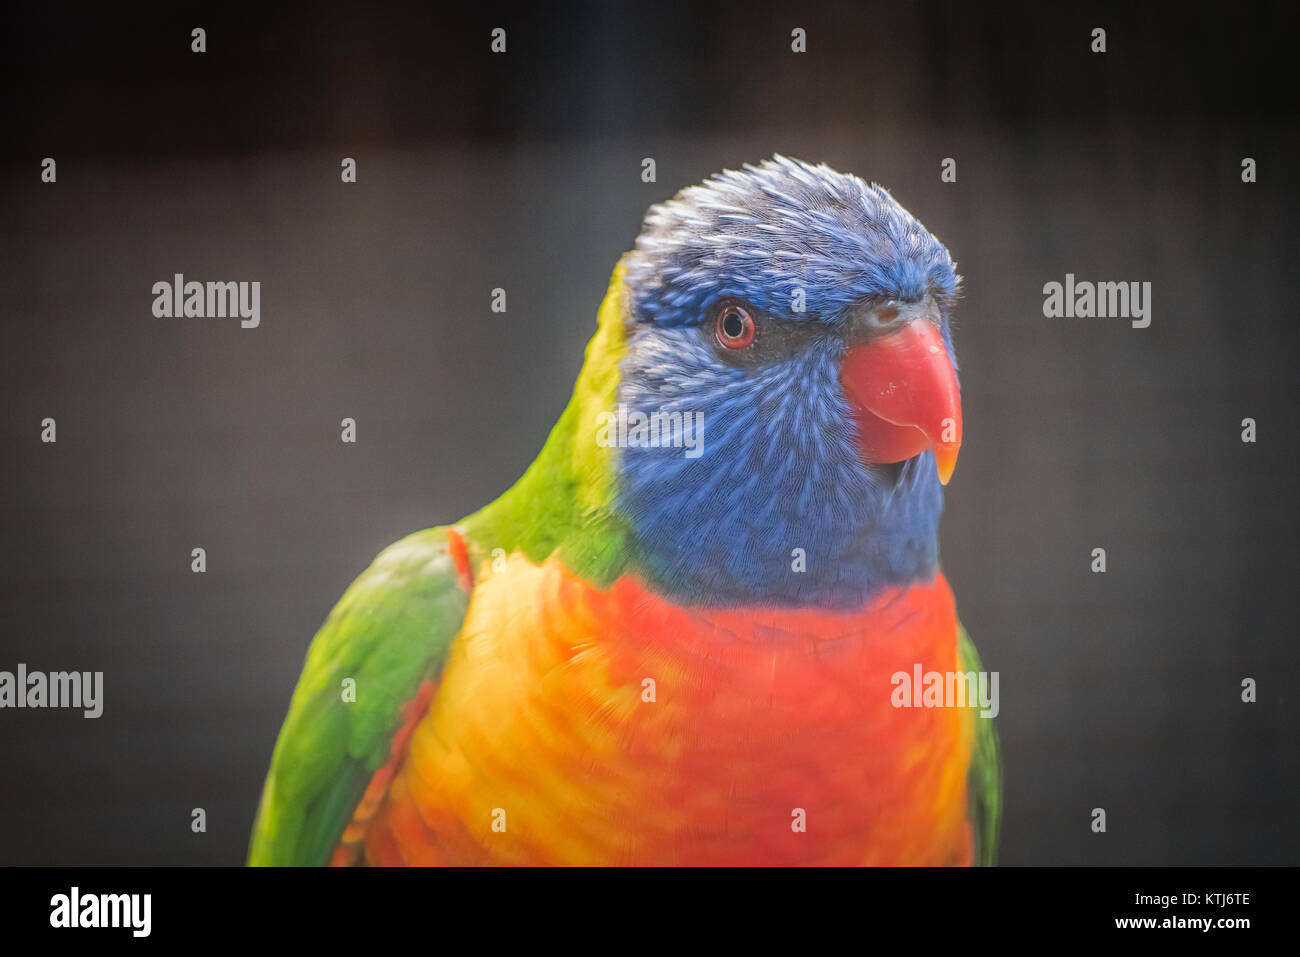 rainbow lorikeet is a species of parrot found in Australia Stock Photo